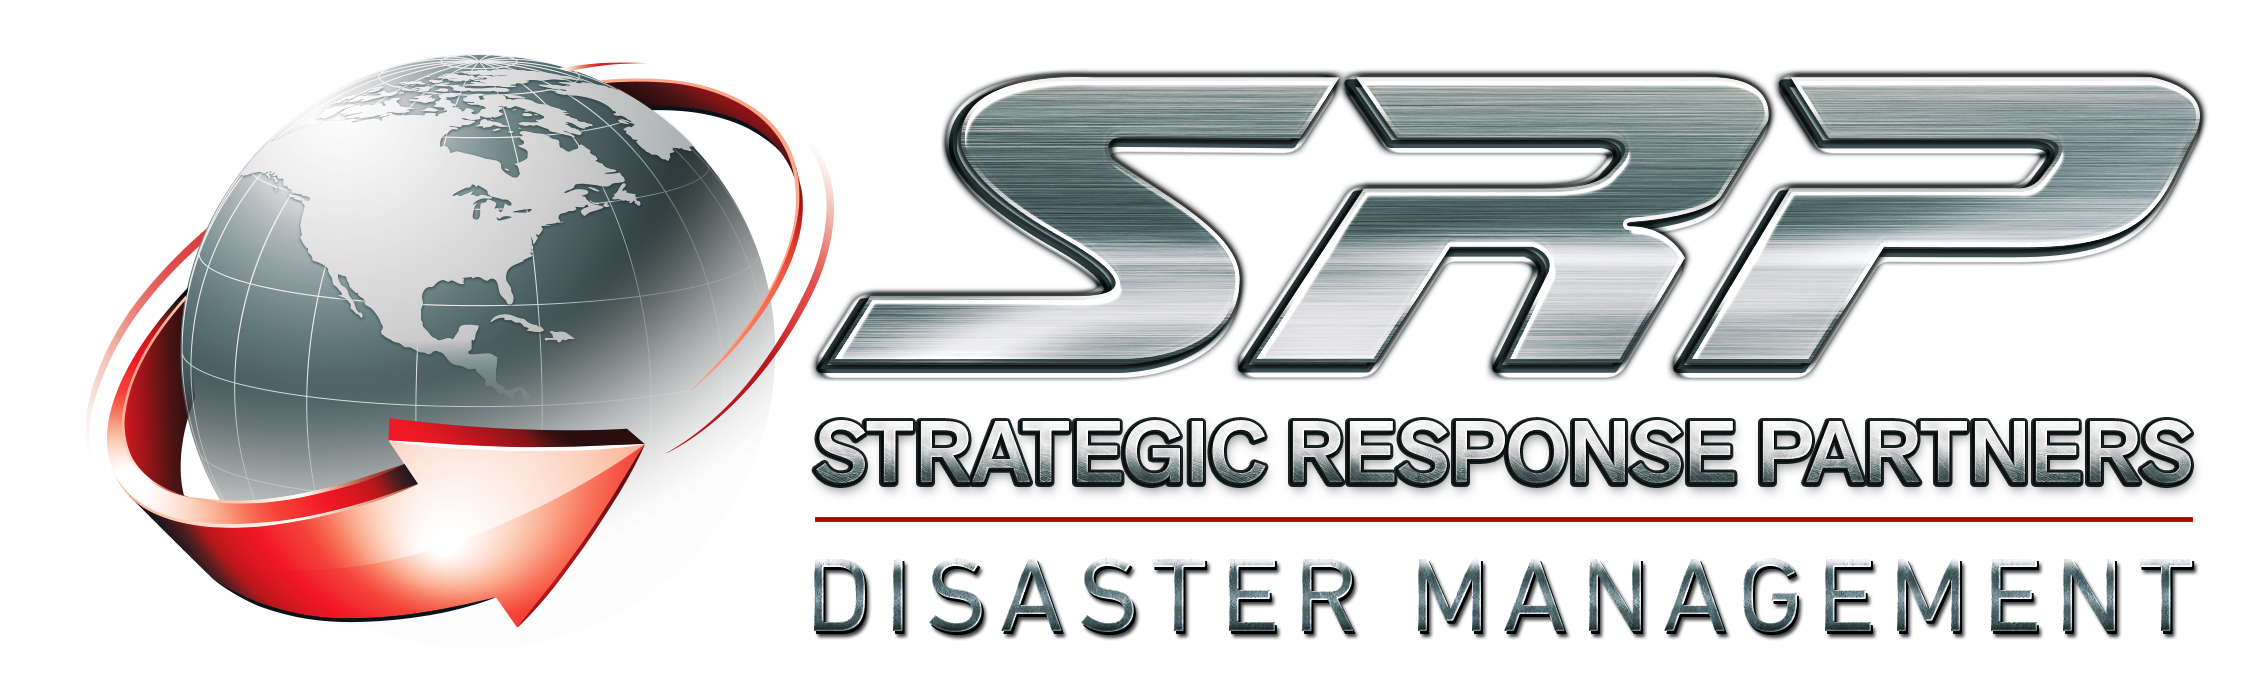 Strategic Response Partners